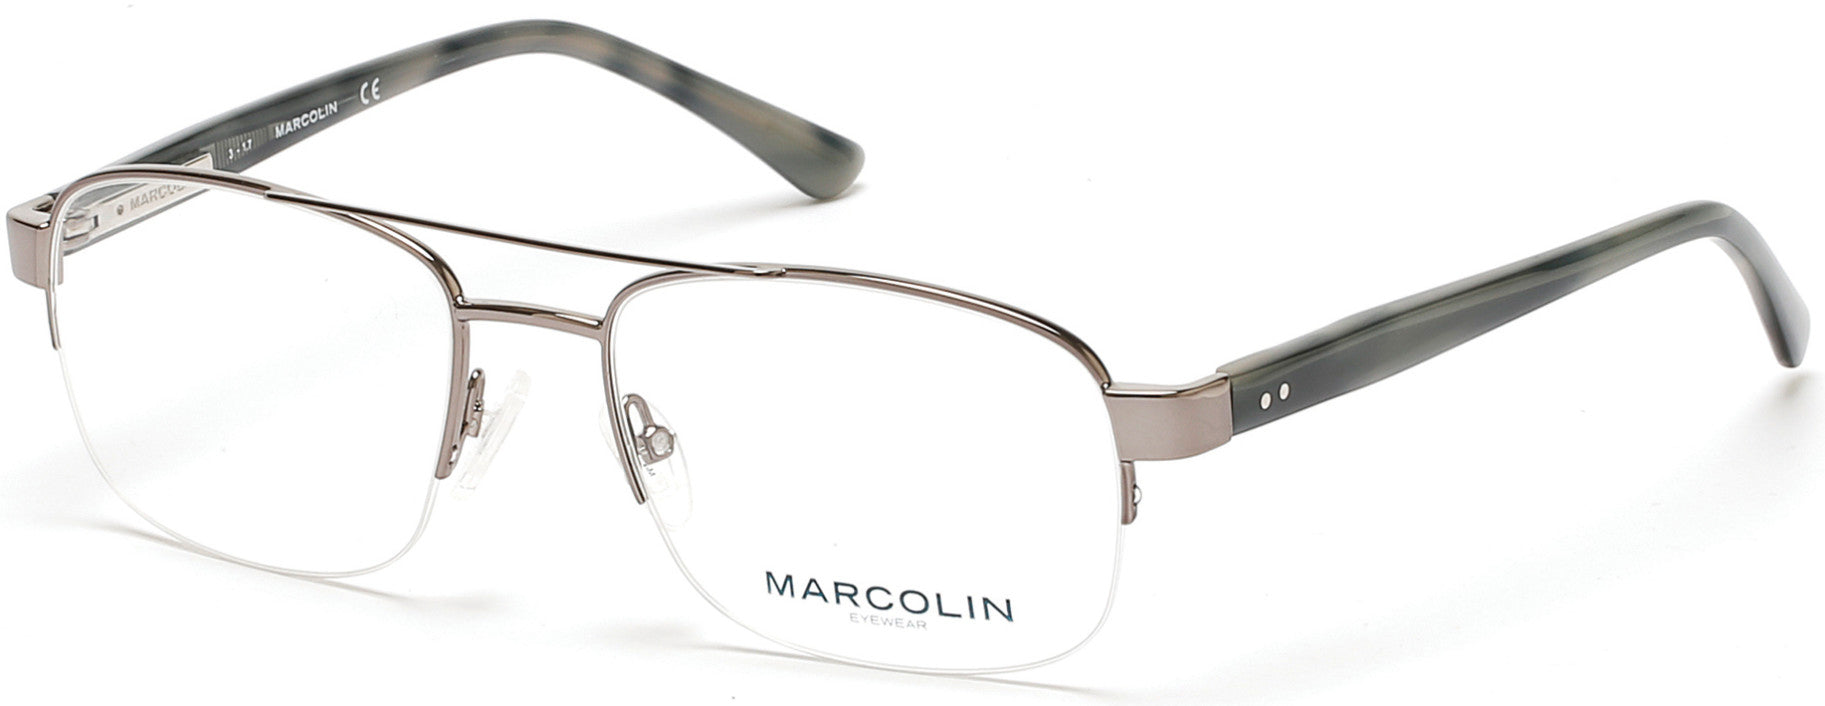 Marcolin MA3009 Eyeglasses 008-008 - Shiny Gunmetal